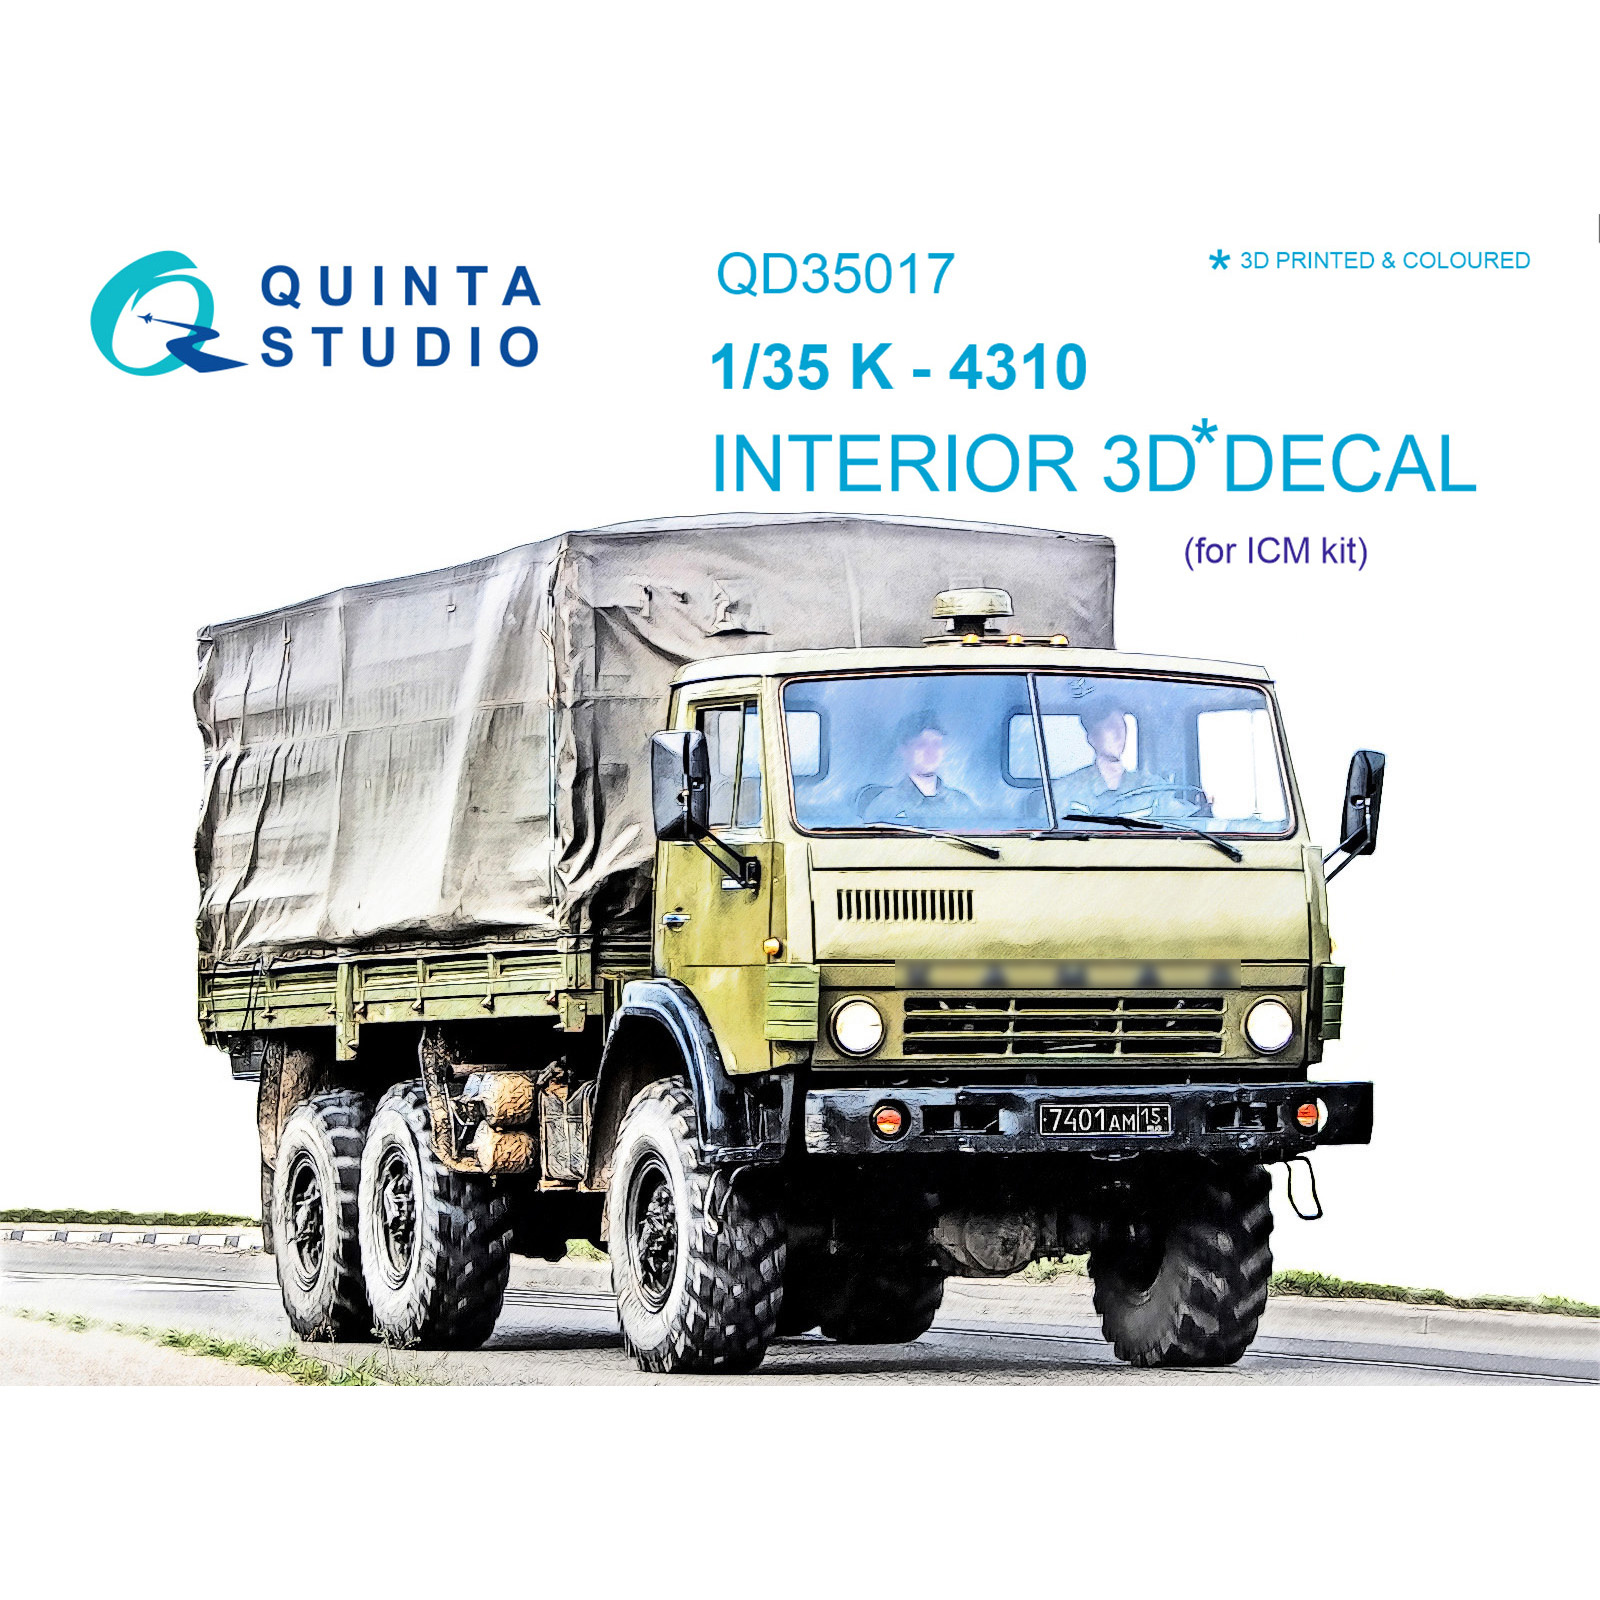 QD35017 Quinta Studio 1/35 3D Cabin Interior Decal for K-4310 (for ICM model)